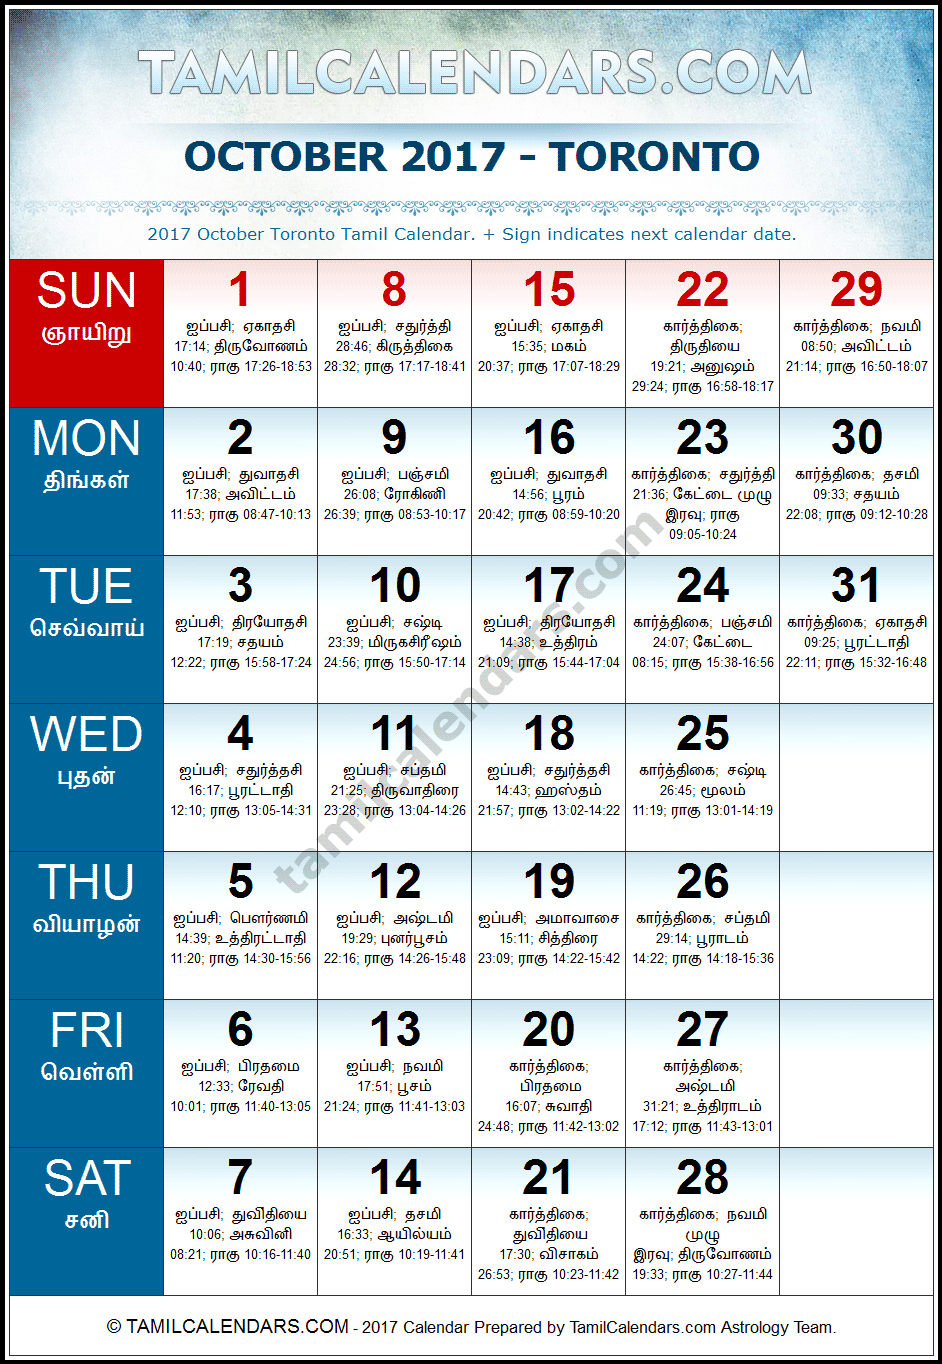 October 2017 Tamil Calendar for Toronto, Canada